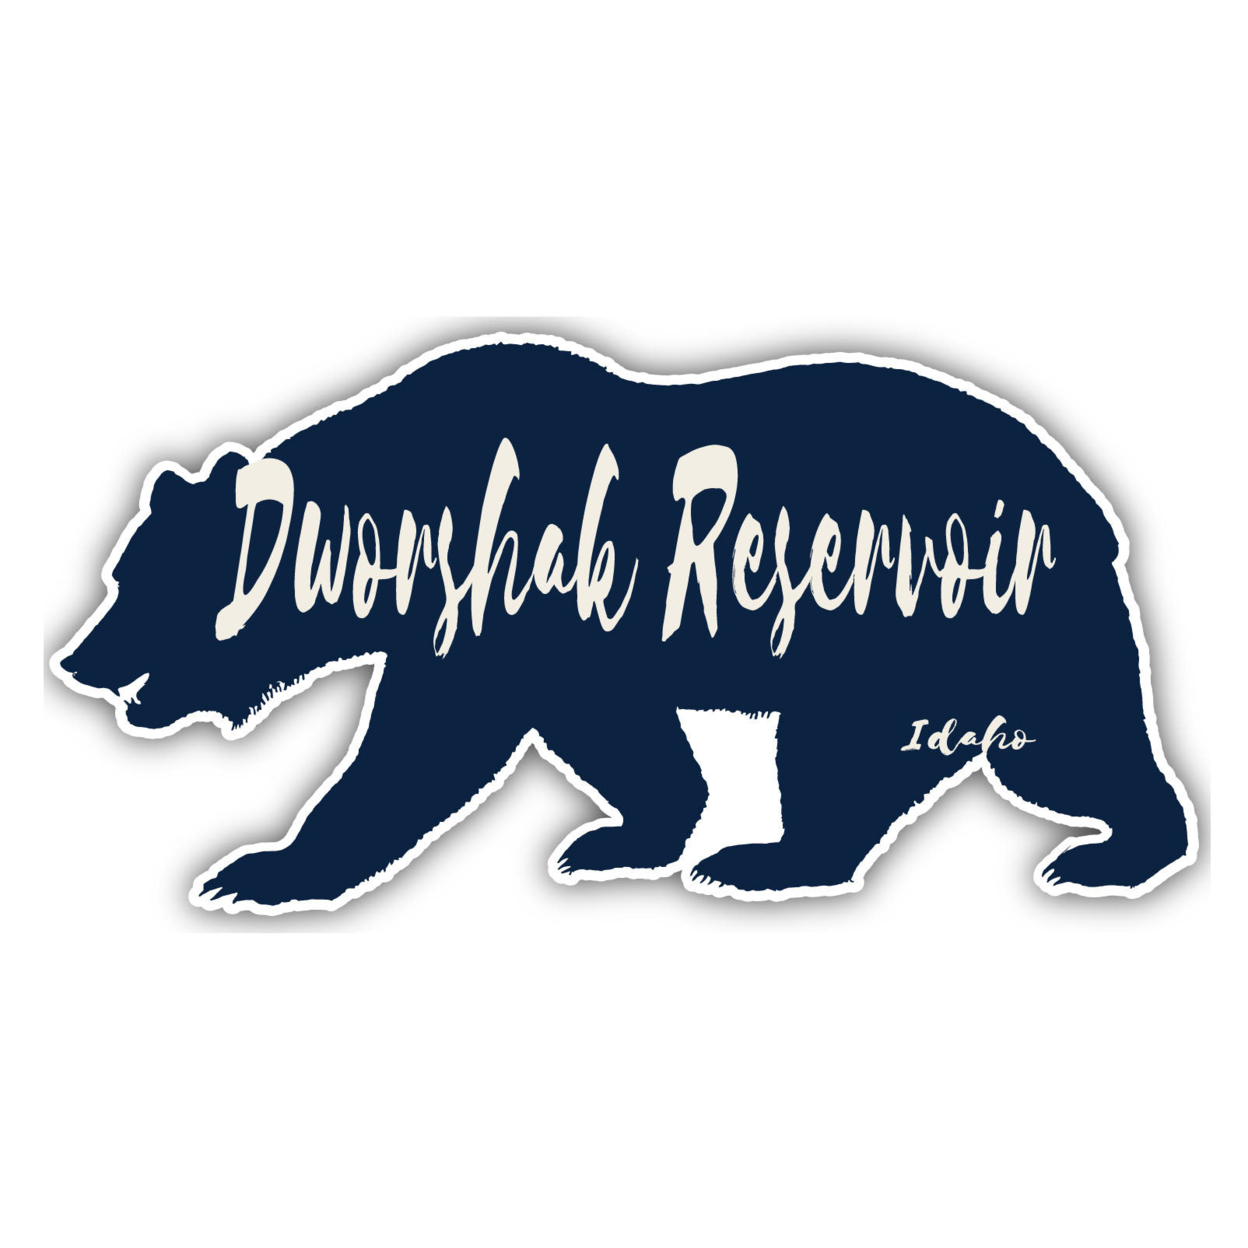 Dworshak Reservoir Idaho Souvenir Decorative Stickers (Choose Theme And Size) - Single Unit, 6-Inch, Bear